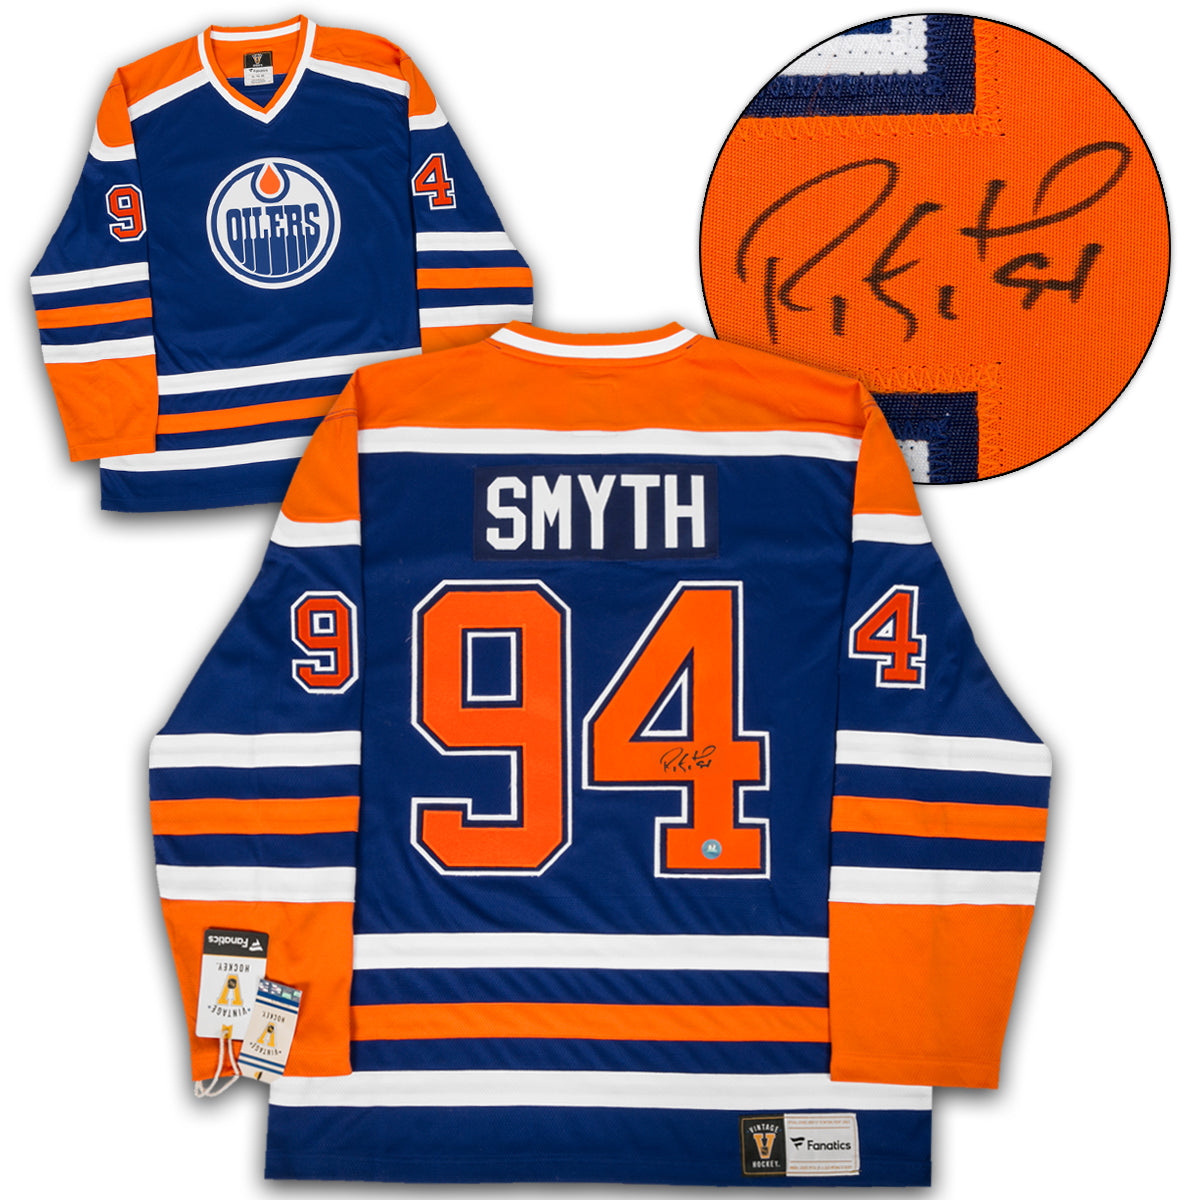 Ryan Smyth - Greater Toronto Area, Canada